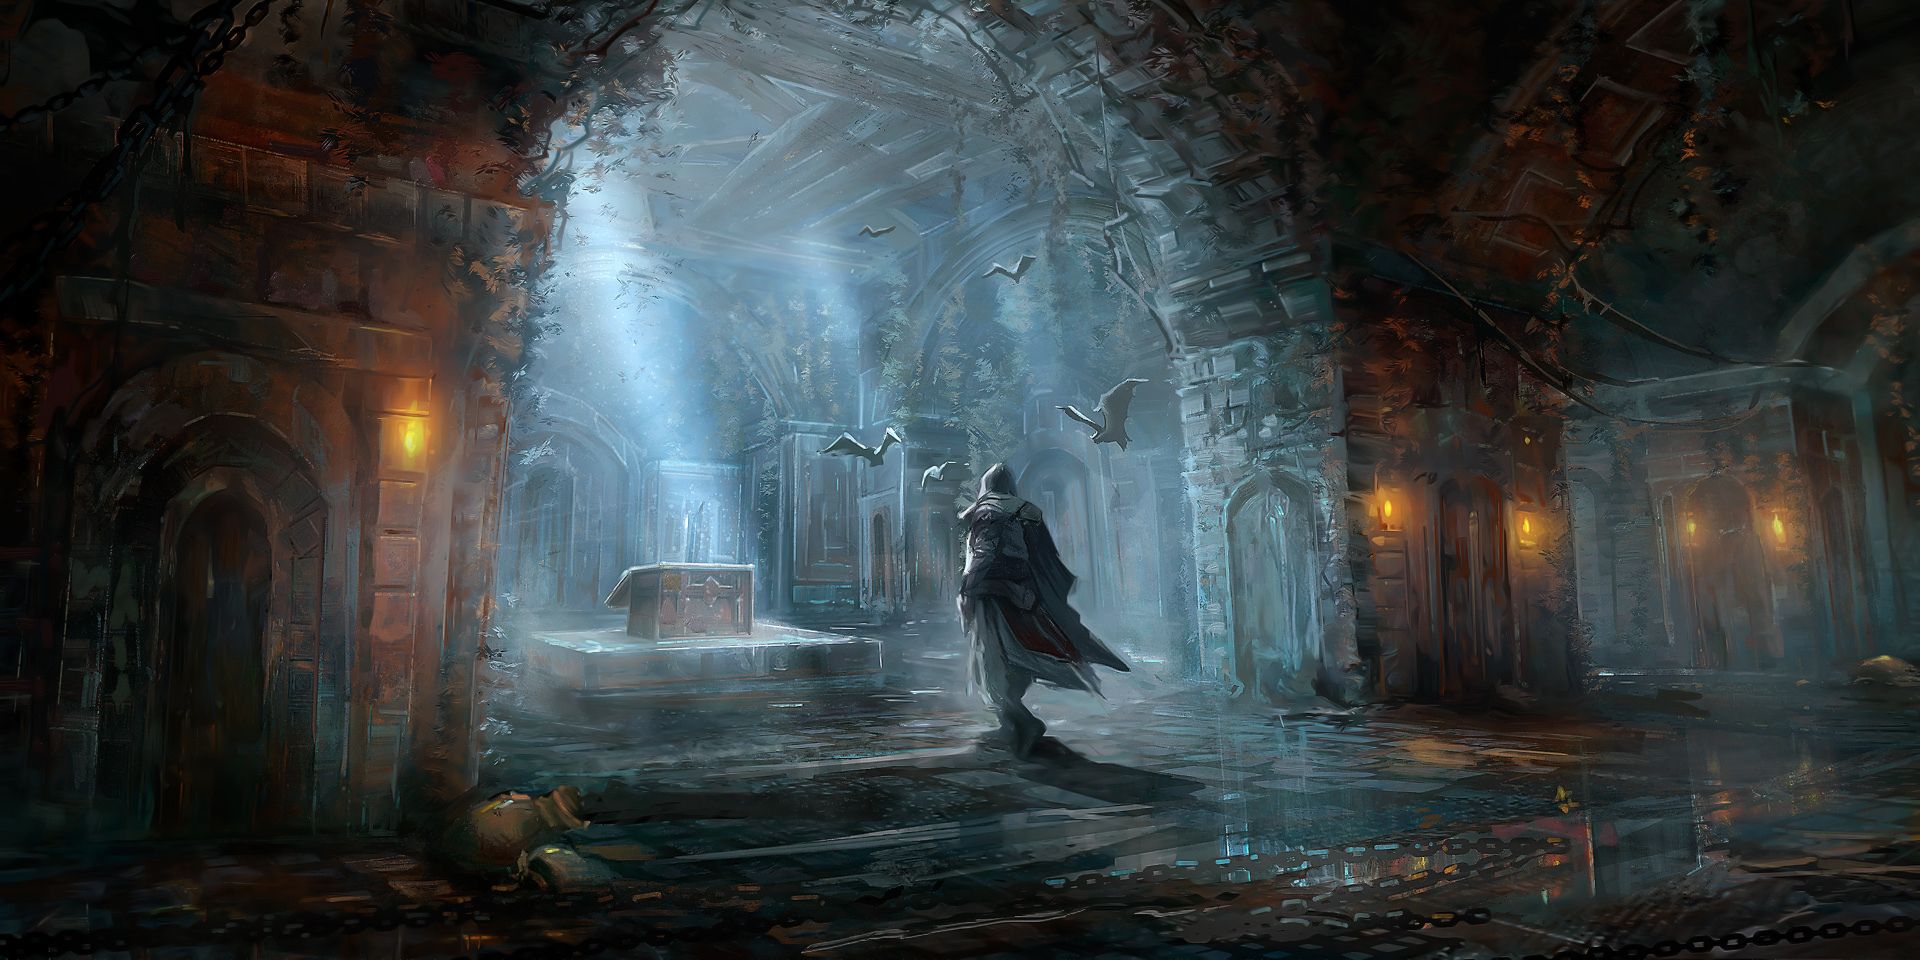 Knight walking through a Dungeon